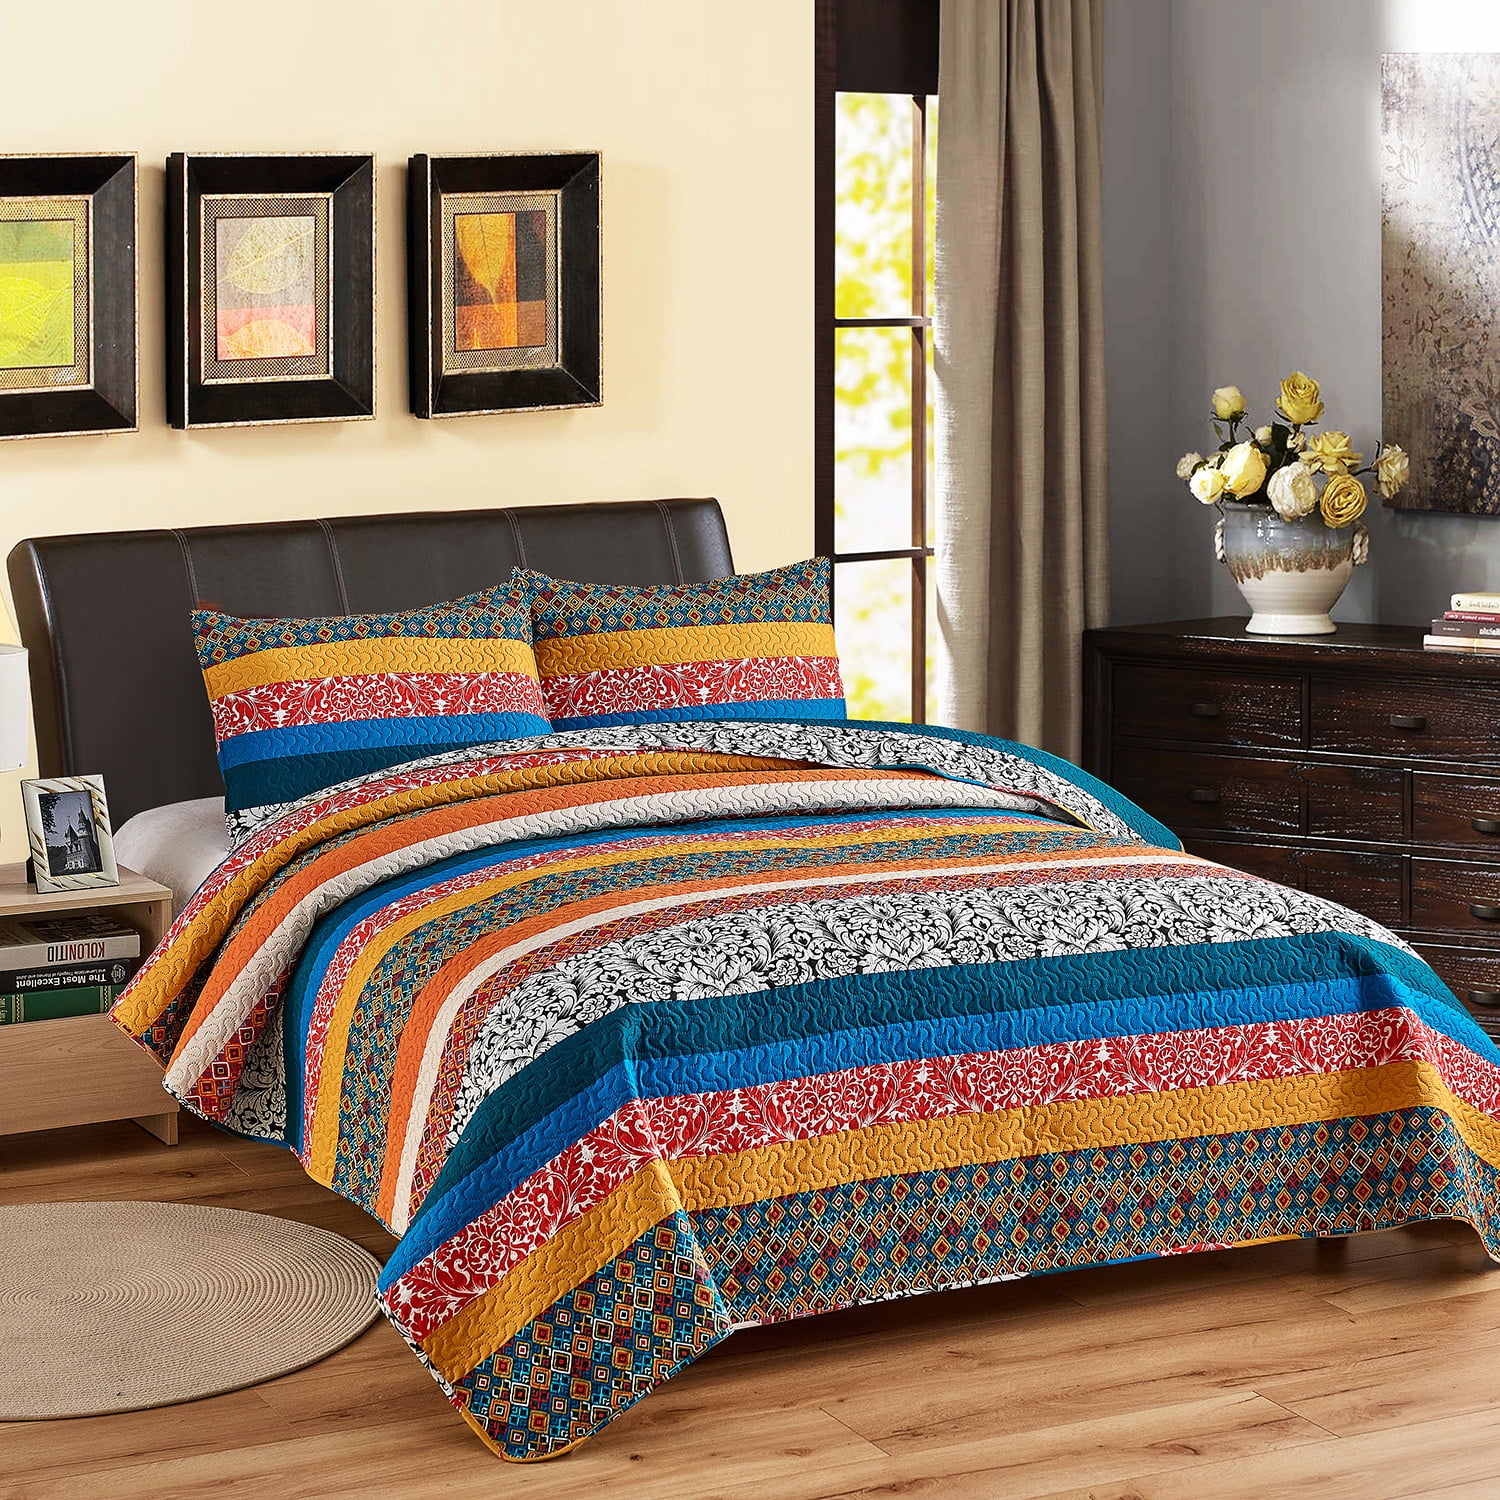 Queen King 3 Piece Lightweight Bedspread Quilt Set Polyester Quilts Prewashed 